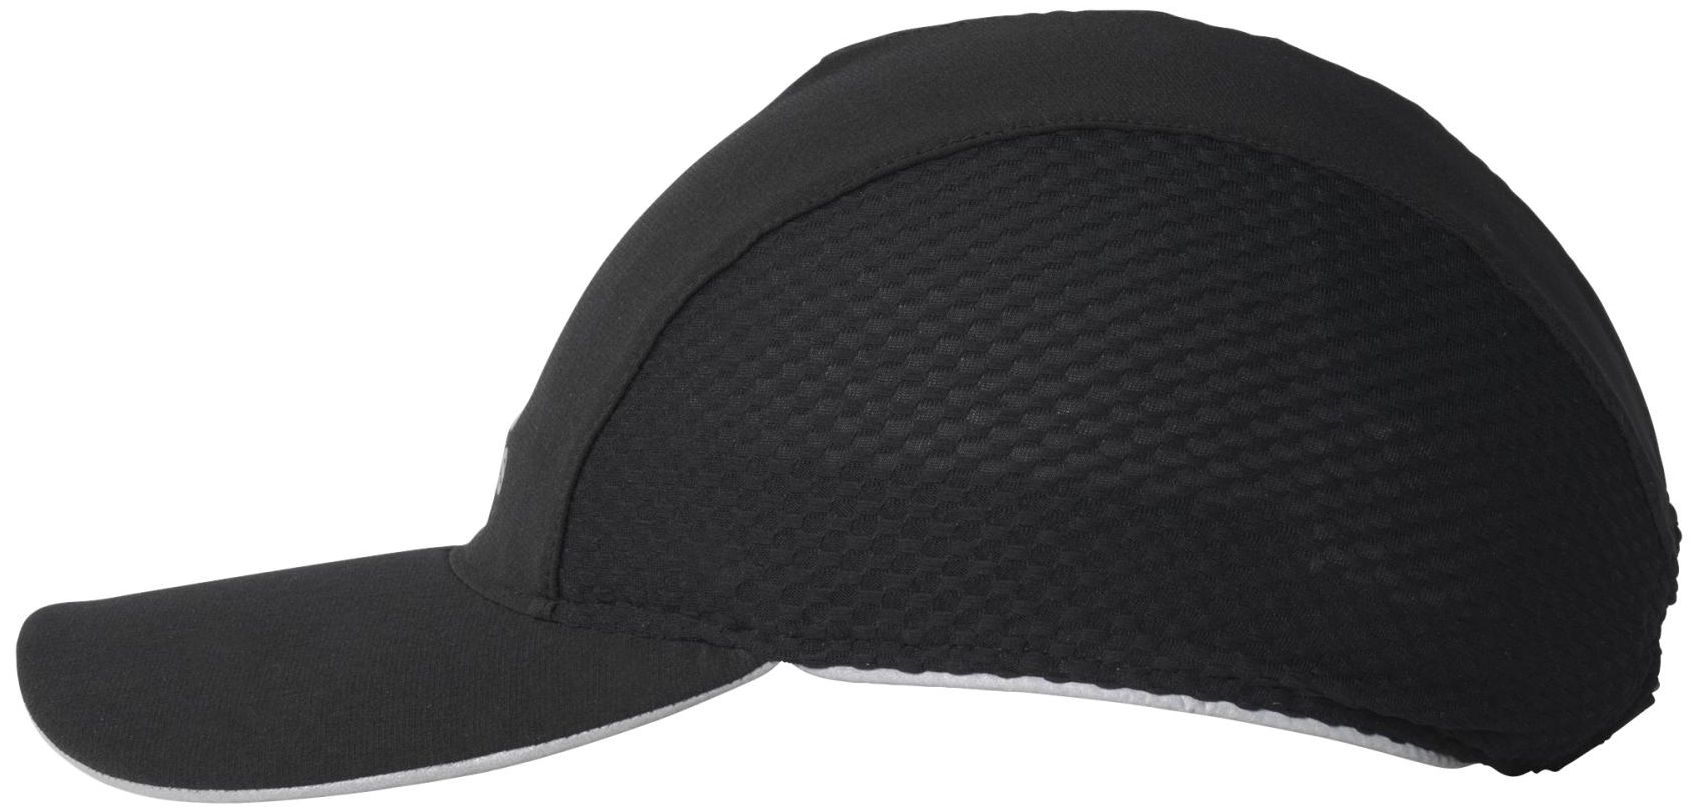 RUN CLMCO CAP - Men's hat